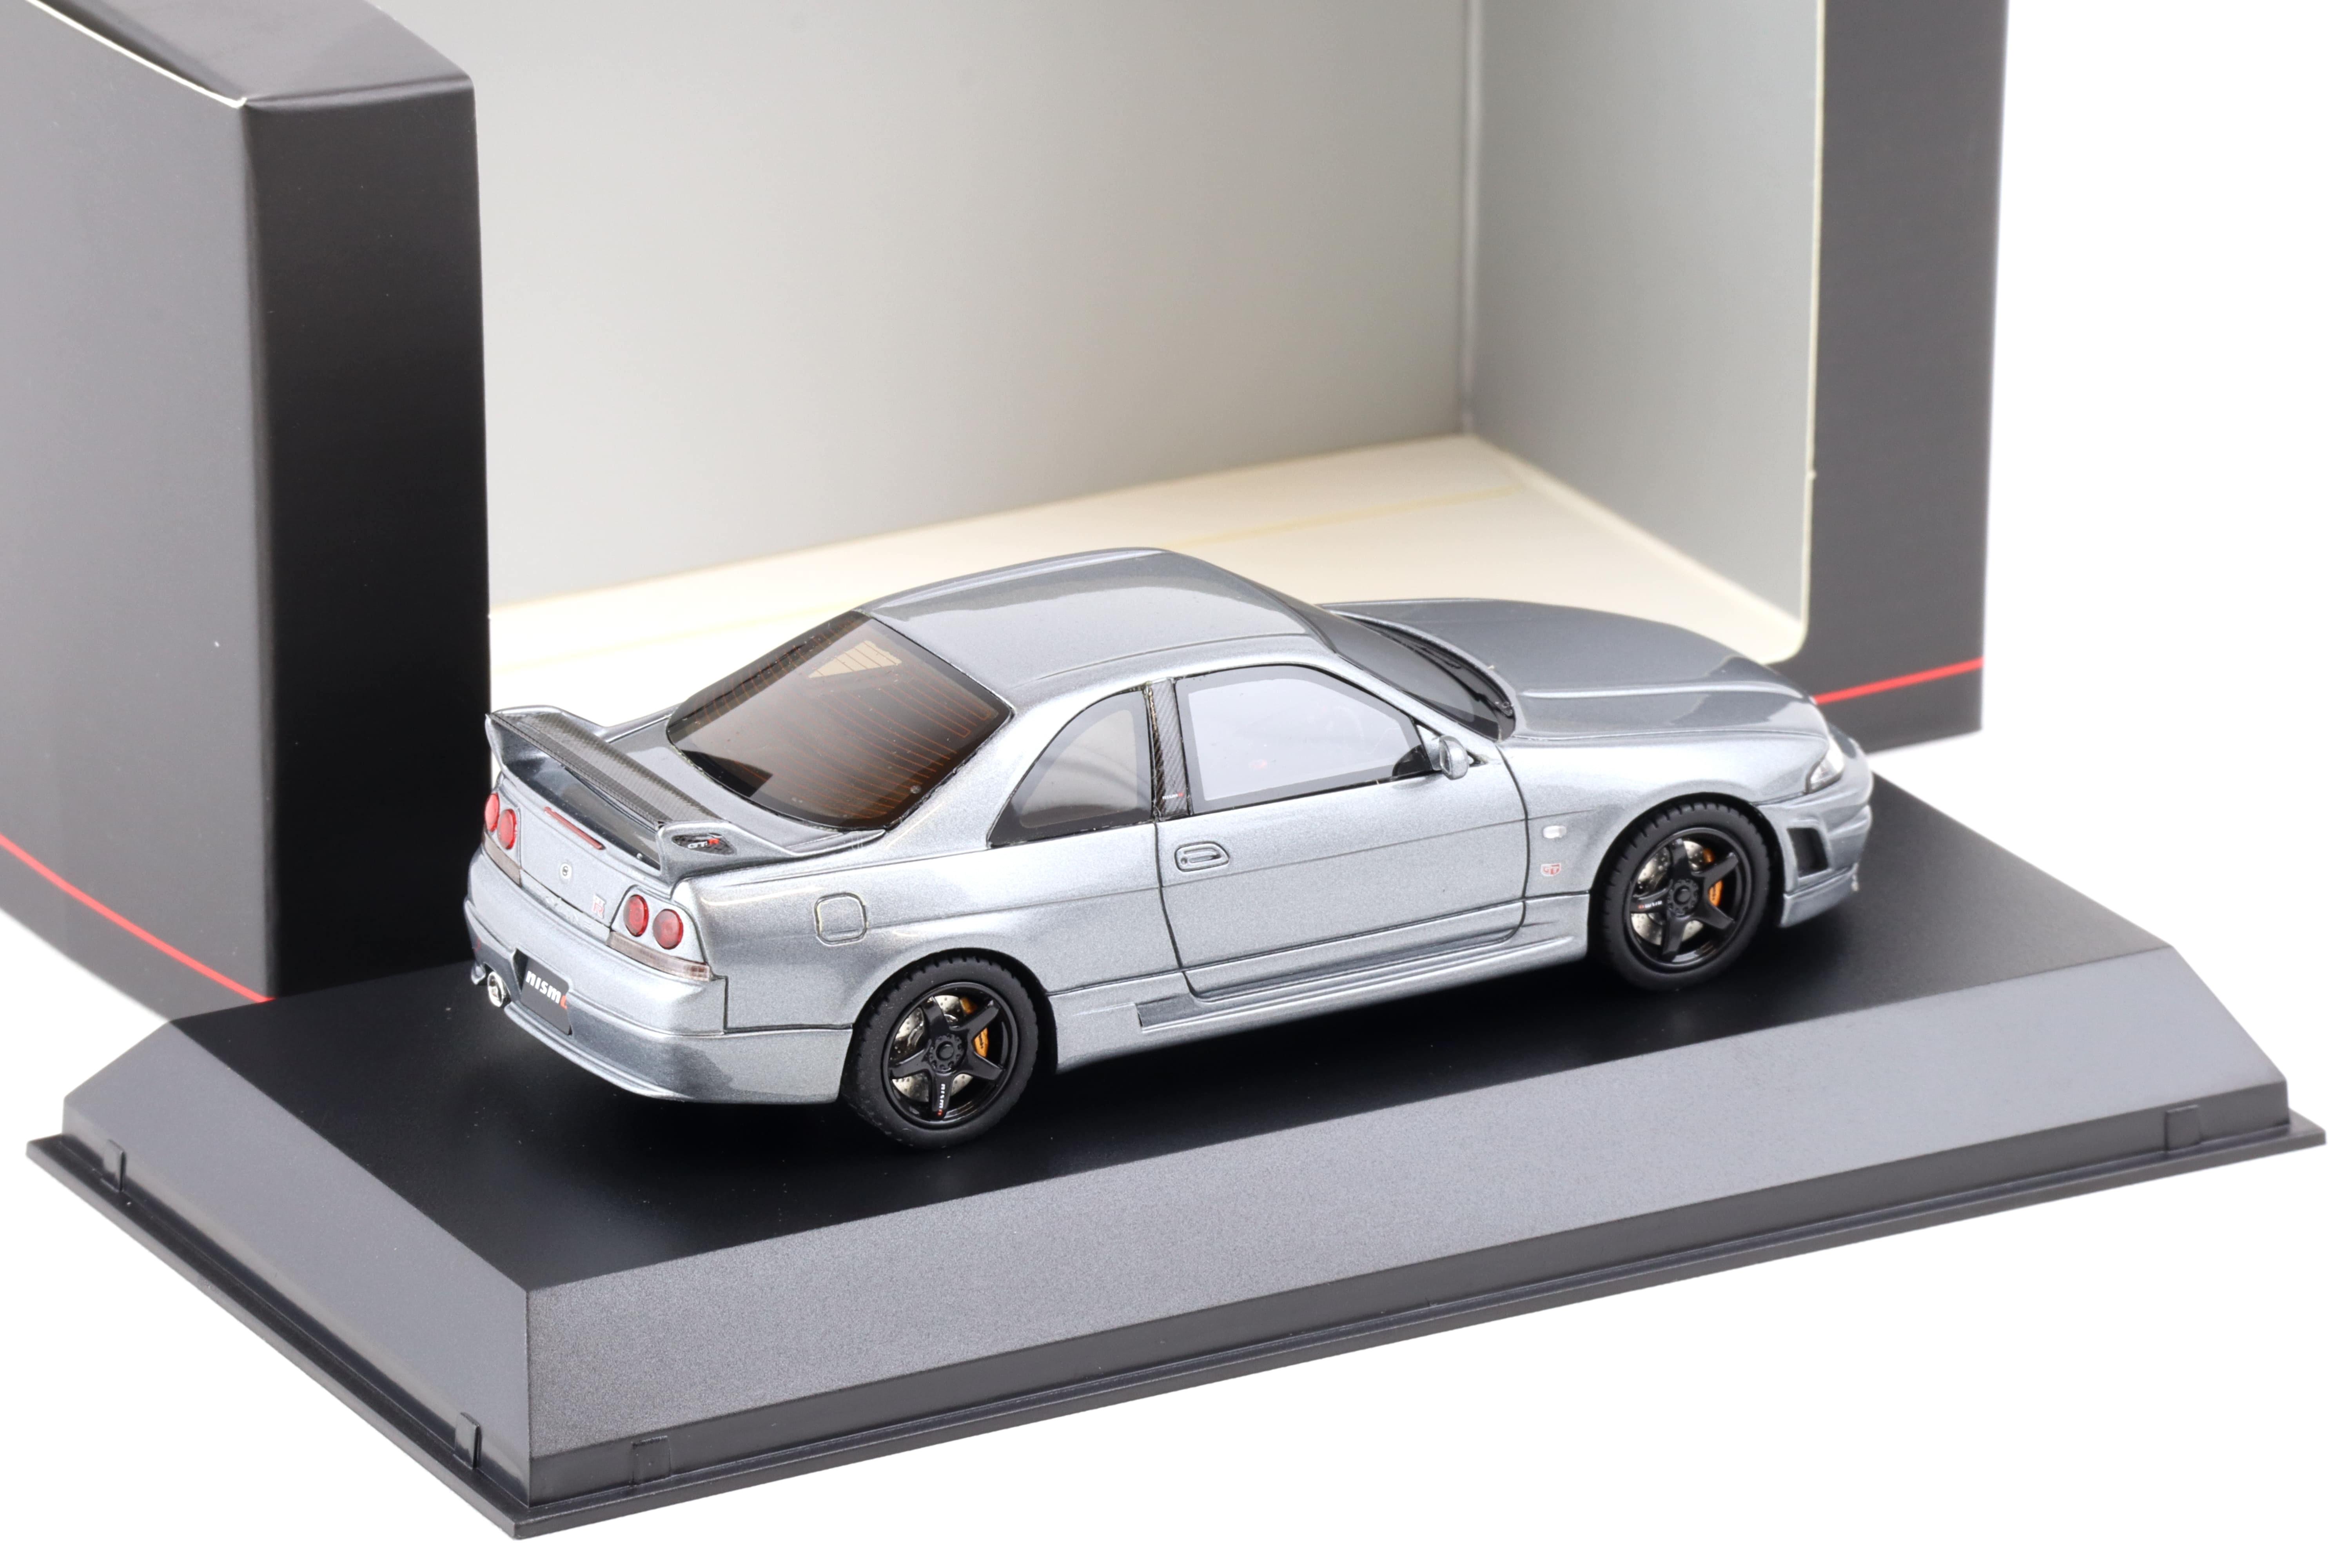 1:43 Kyosho Nissan Skyline GT-R R33 Nismo Grand Touring Car grey KSR43109GR